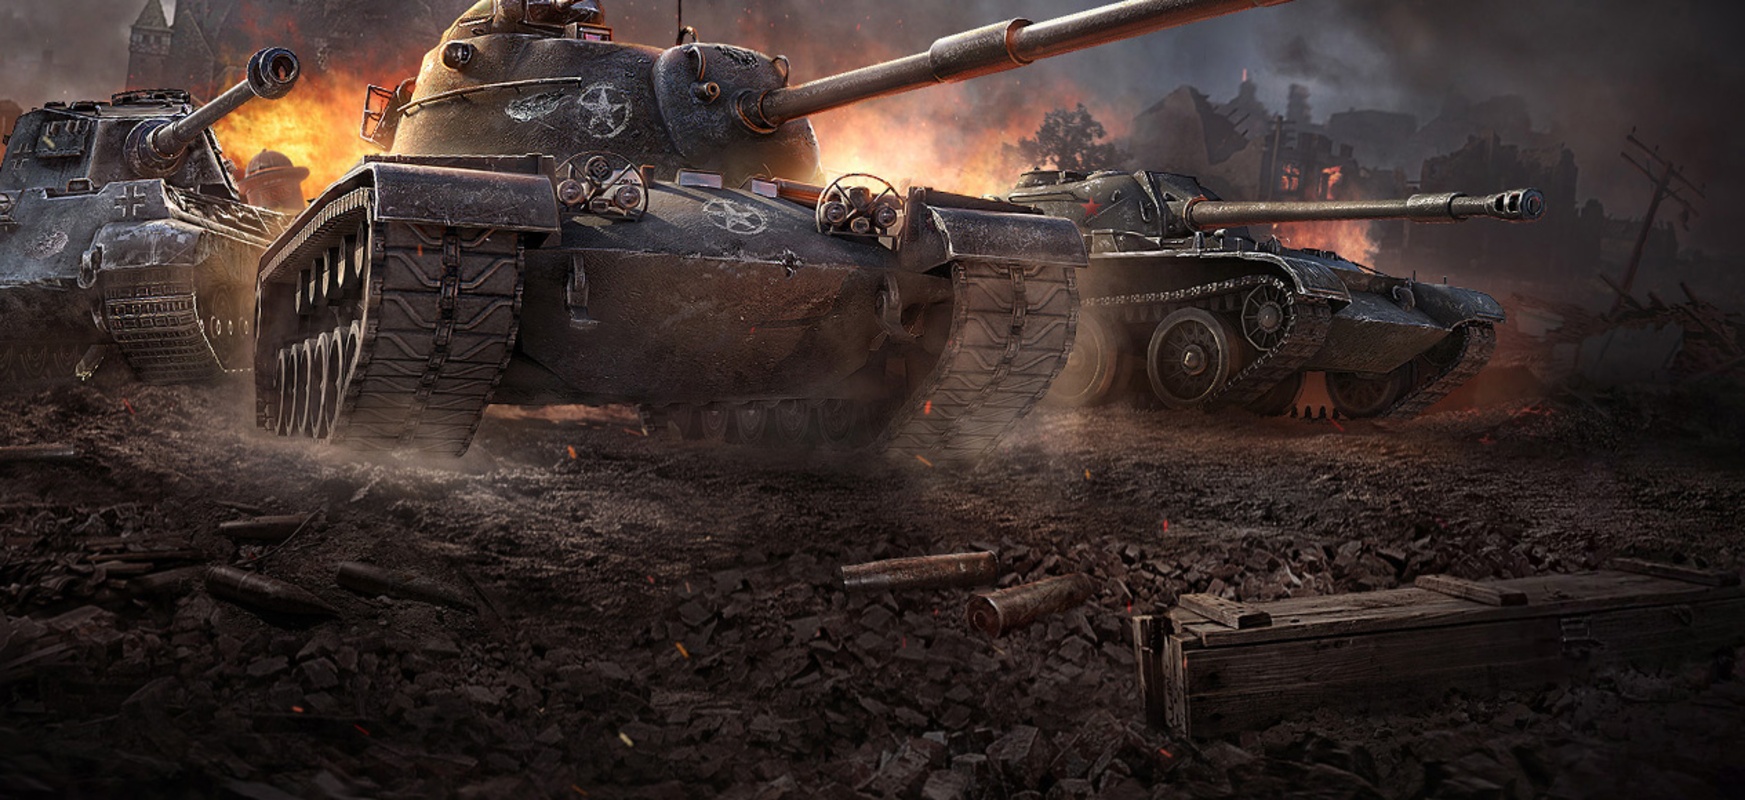 World of Tanks Blitz 3D online 9.8.0.690 APK for Android Screenshot 1